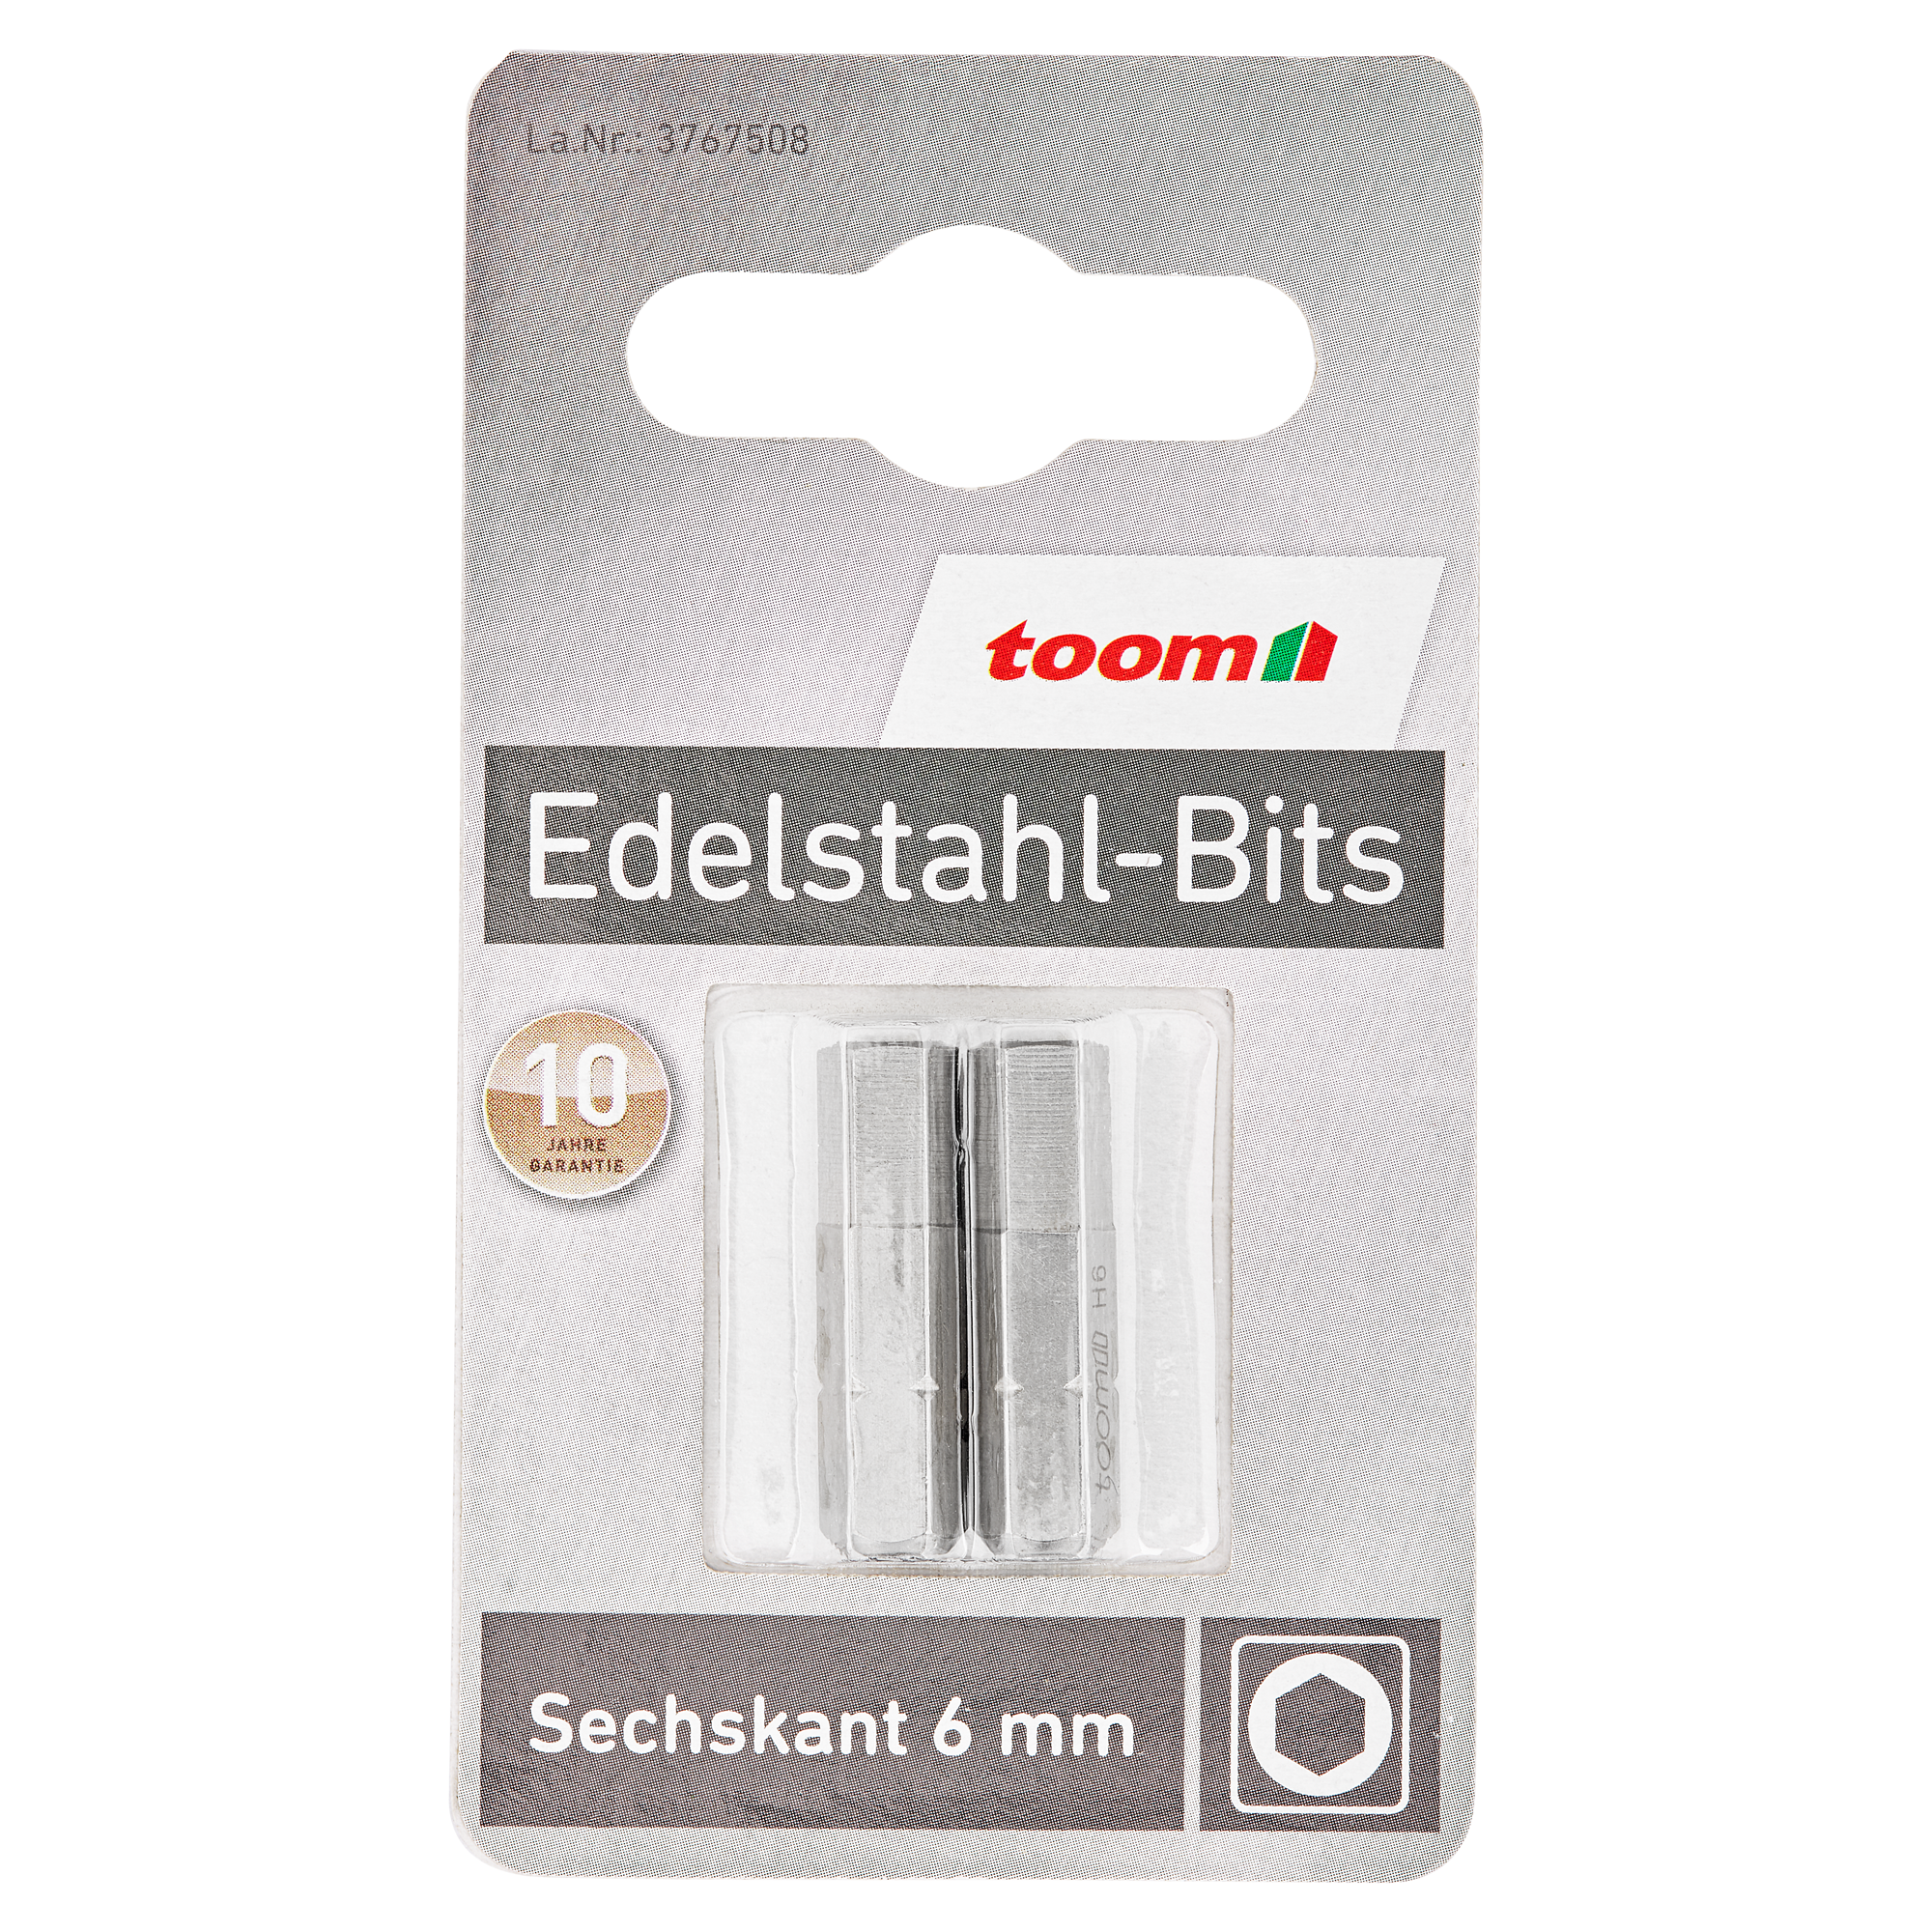 Sechskantbits Edelstahl 6 mm 2 Stück + product picture